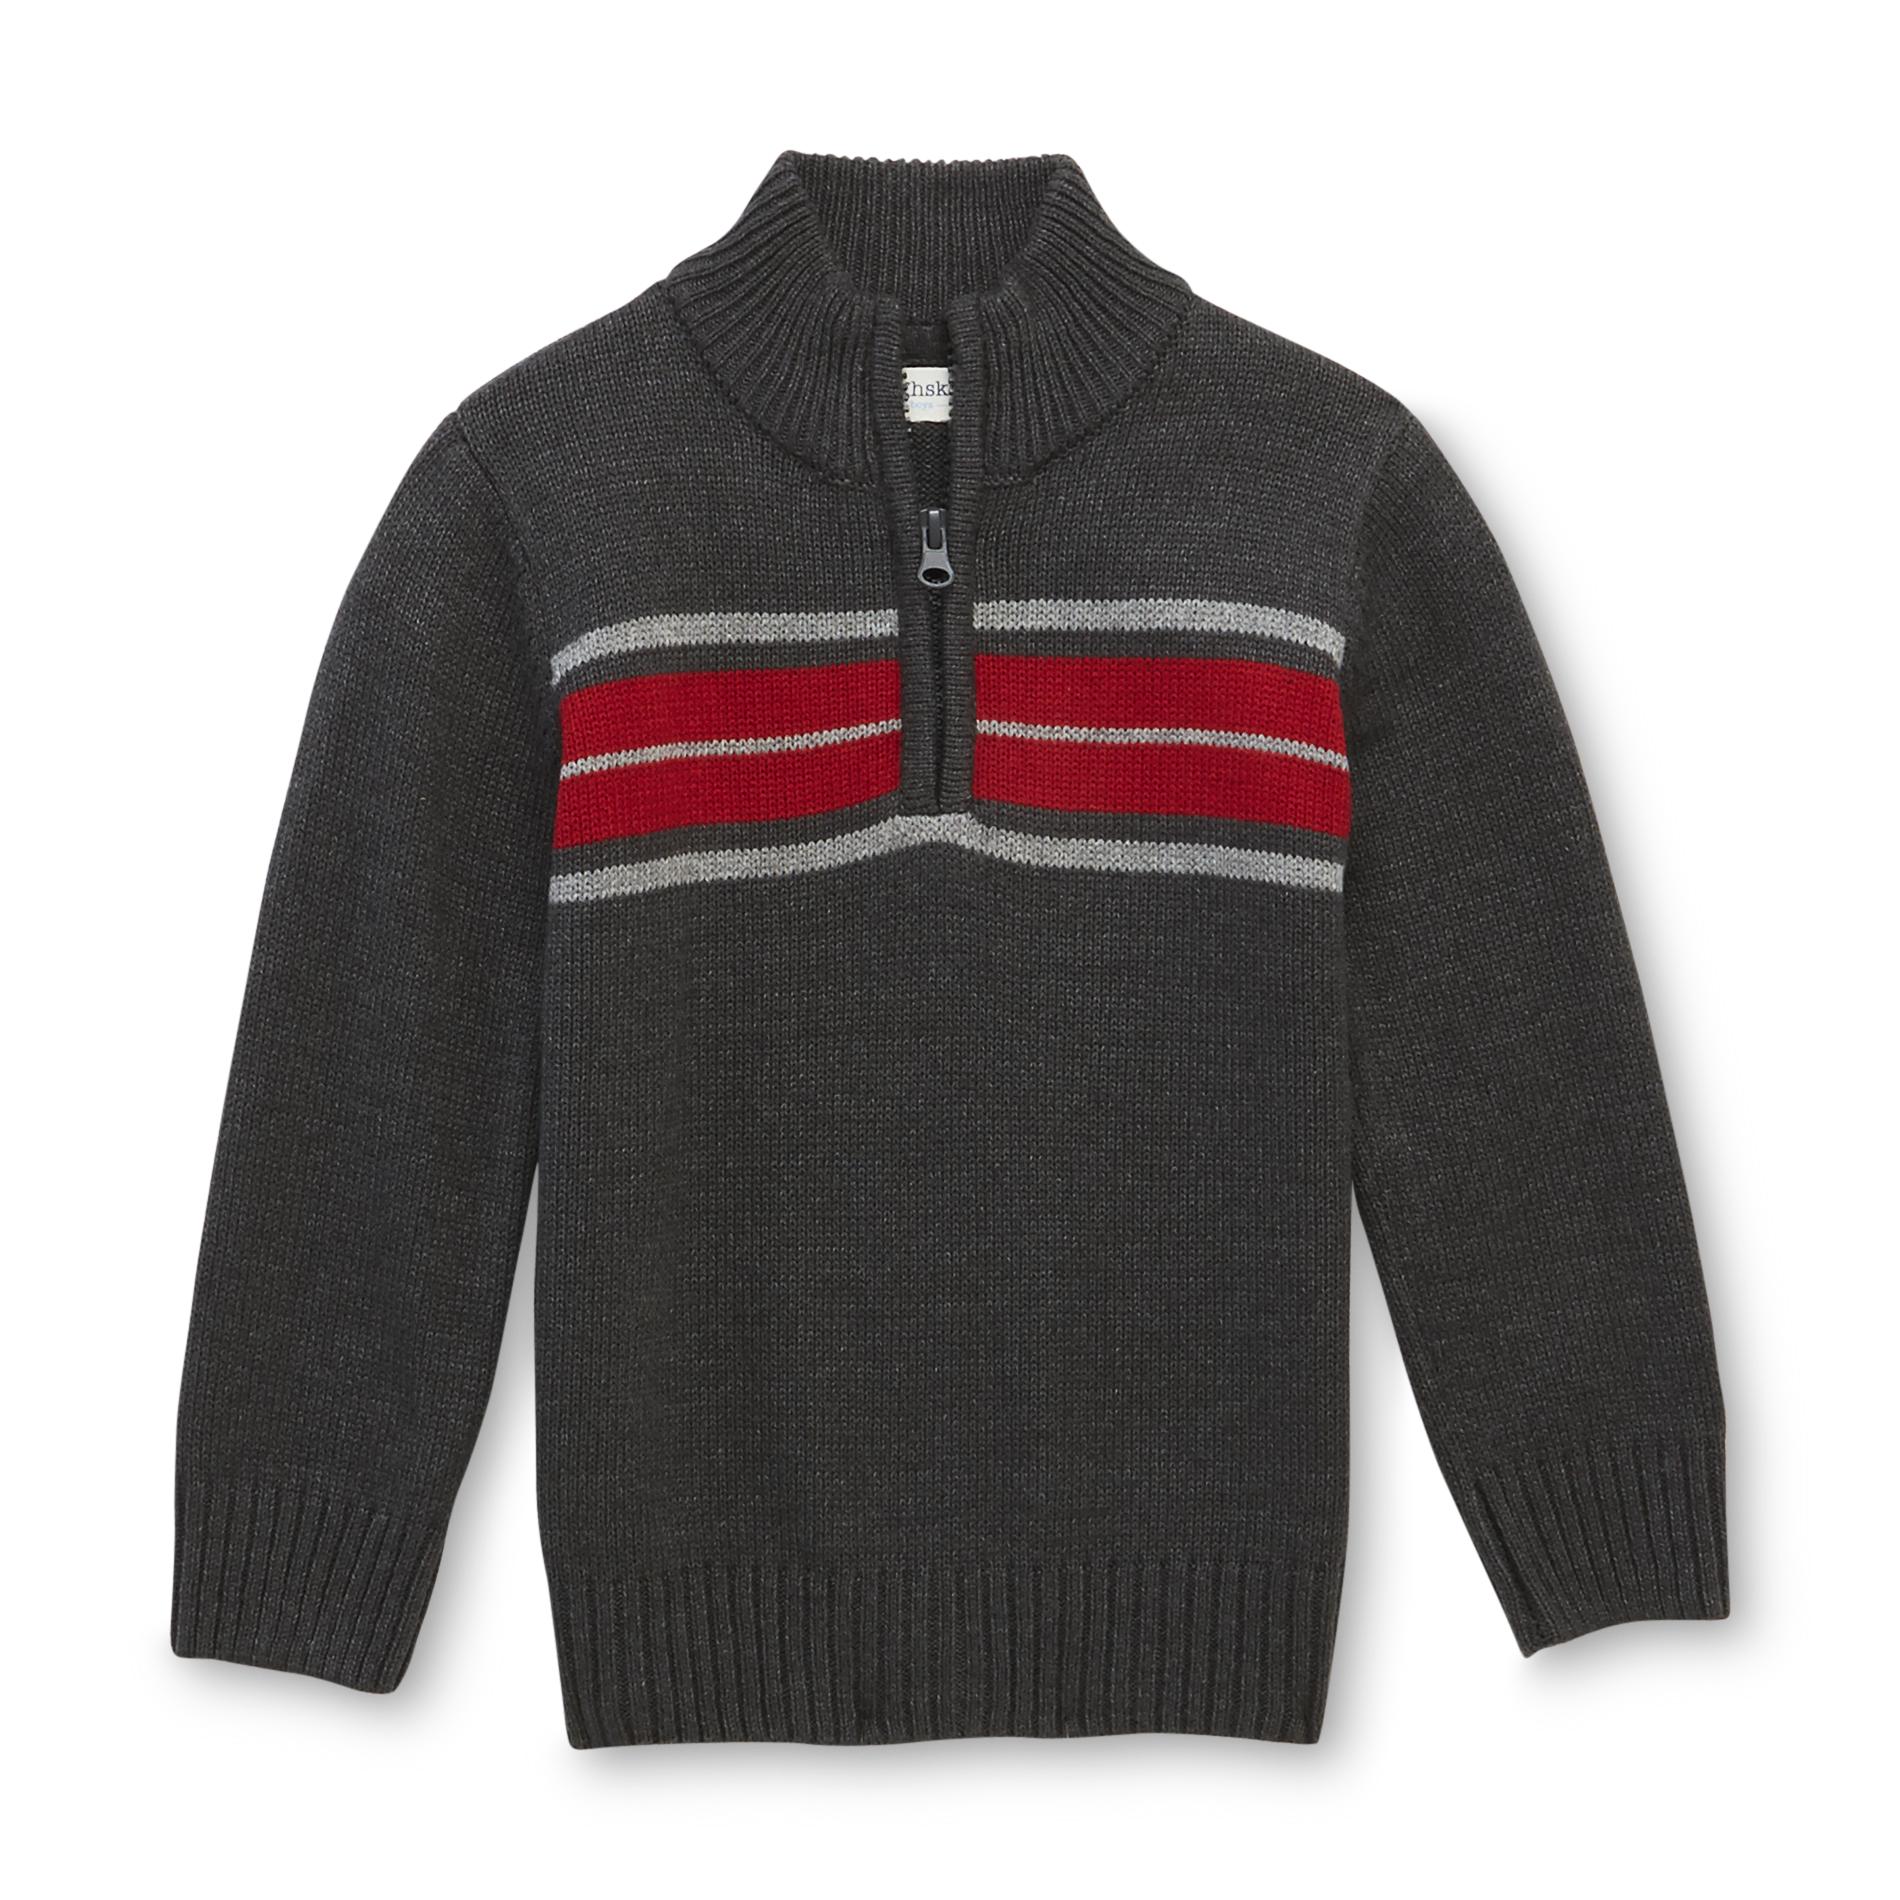 Toughskins Boy's Quarter-Zip Sweater - Striped